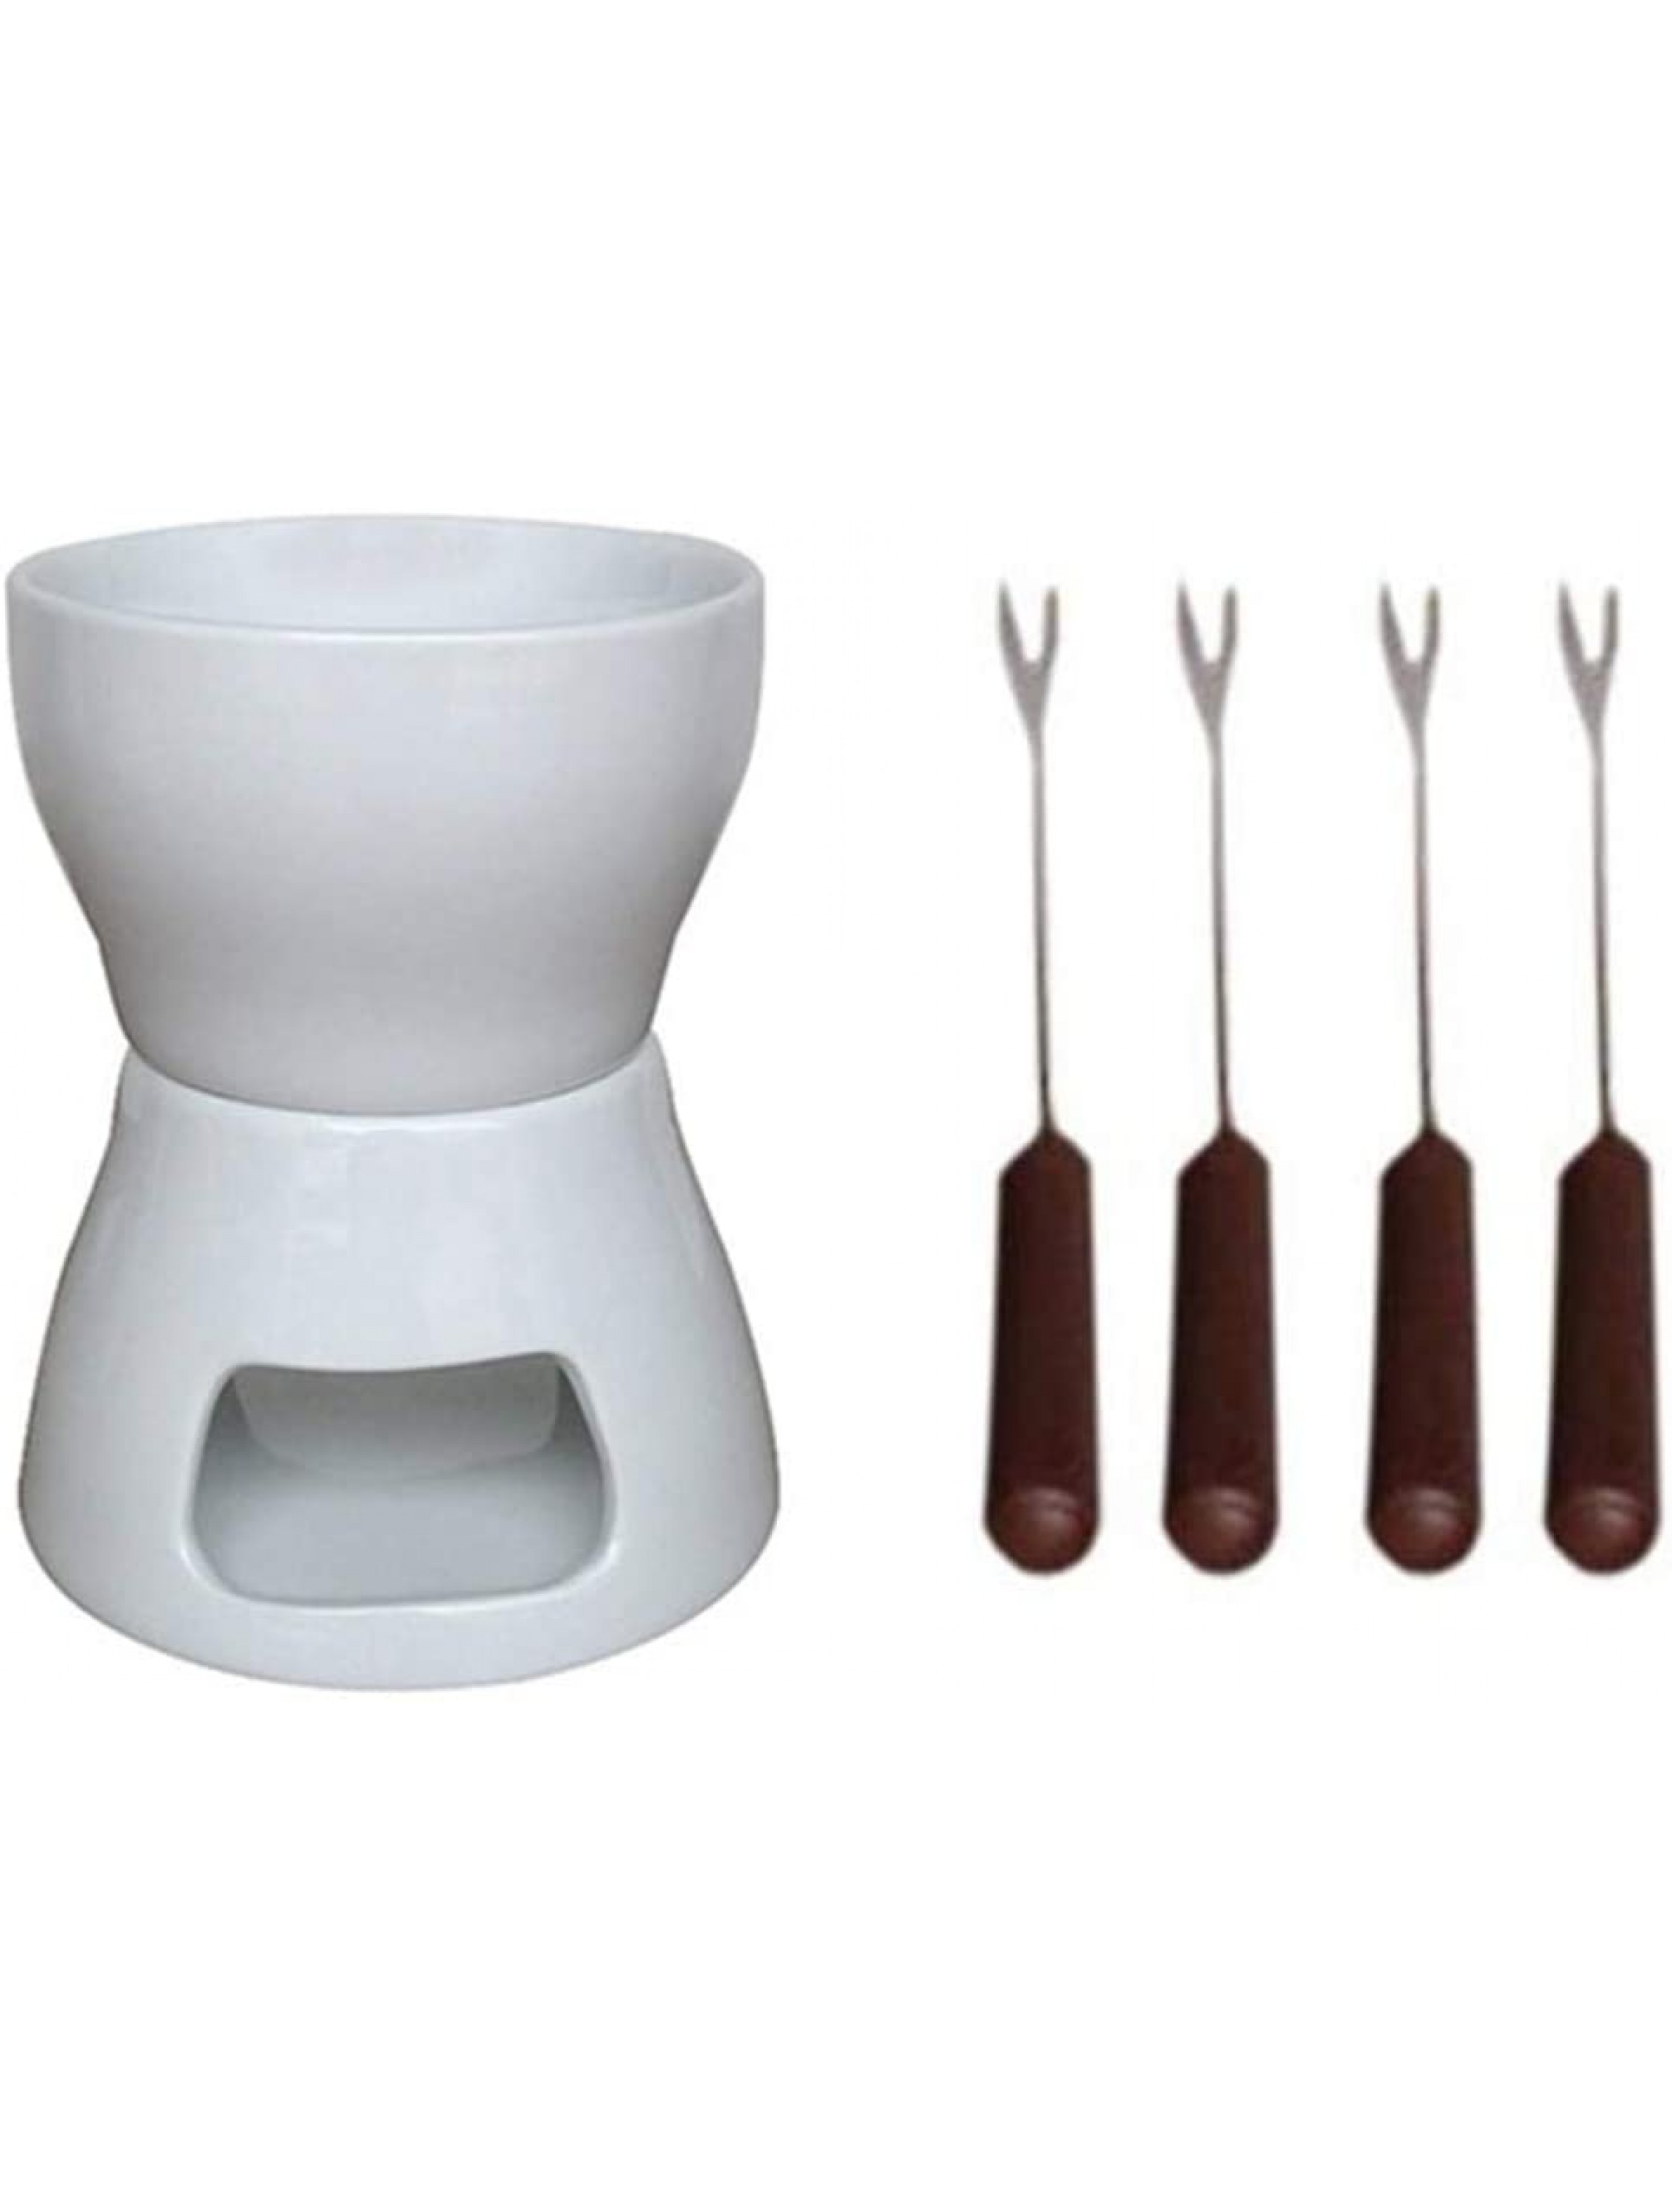 MOKY 400ml Ceramic Chocolate Fondue Set with Forks Tea Light Porcelain Melting Pot with 4 Fondue Forks 12 x 15cm - BS2K71X0R